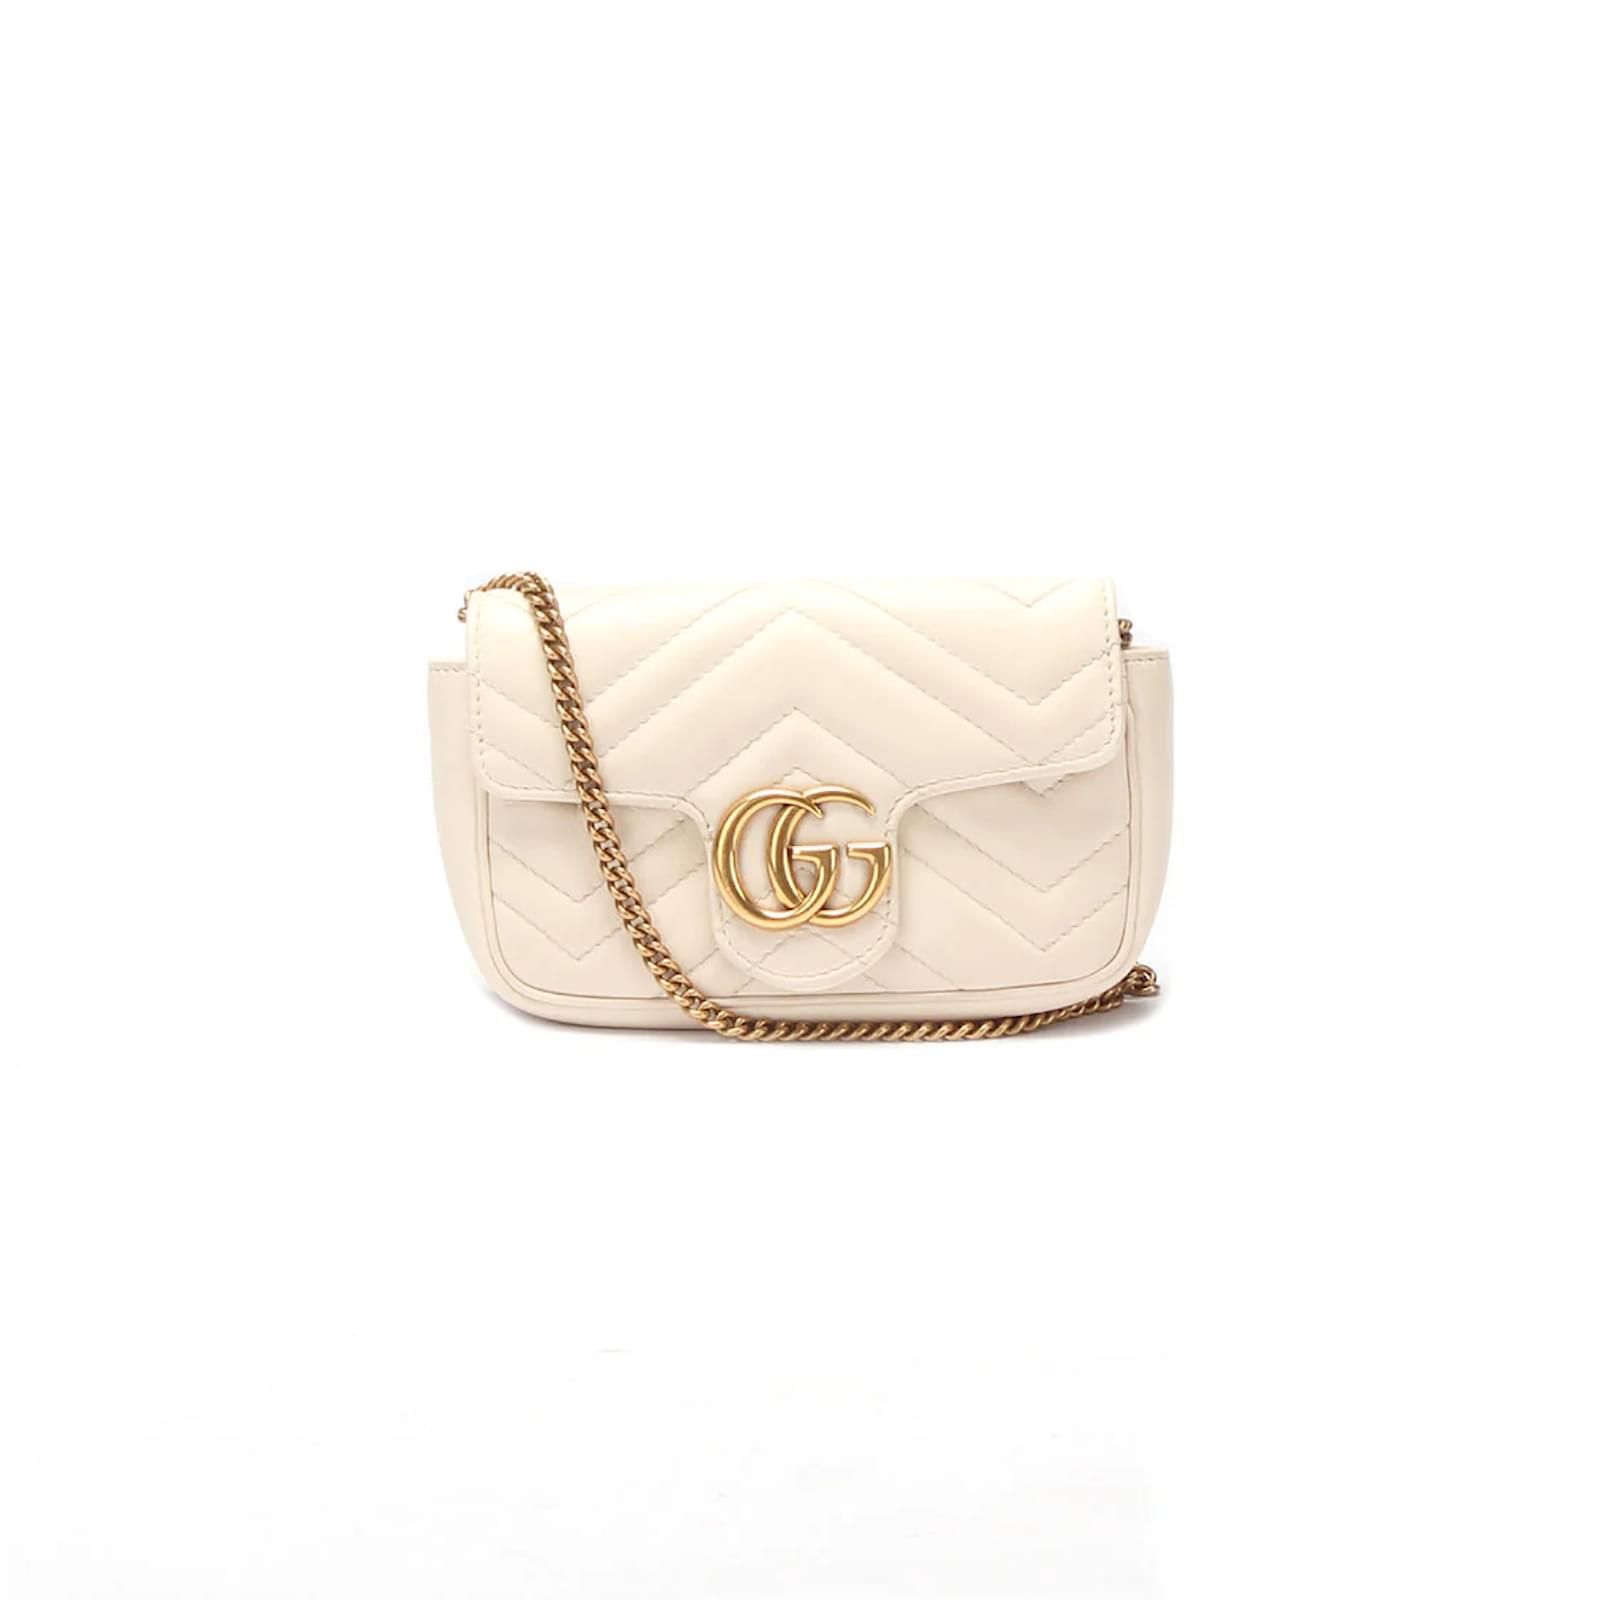 GG Marmont leather super mini bag